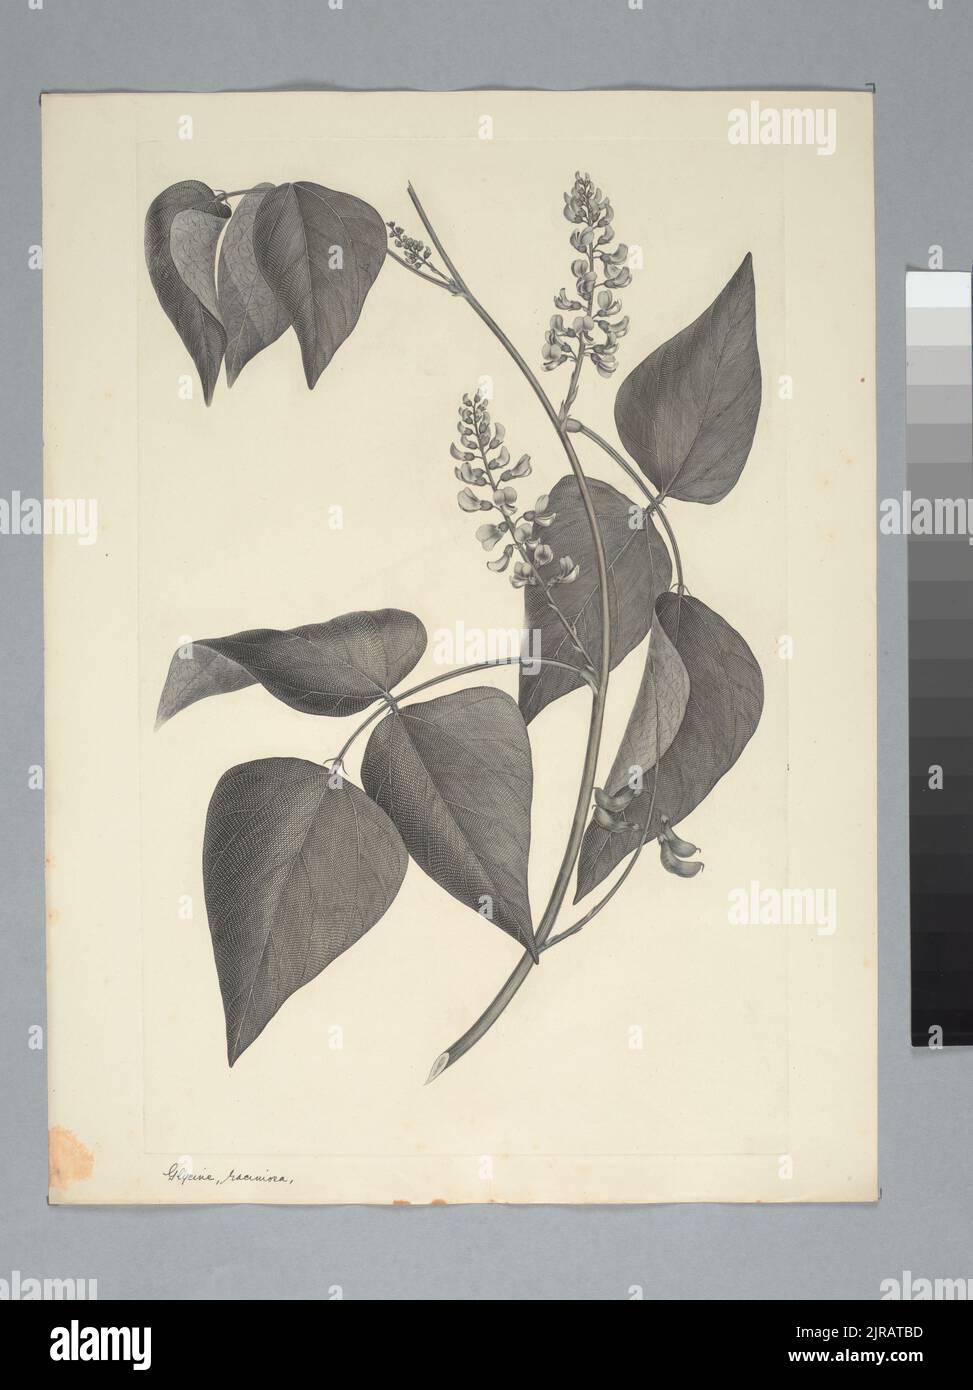 Rhynchosia acuminatissima Miquel, by Sydney Parkinson. Gift of the British Museum, 1895. Stock Photo